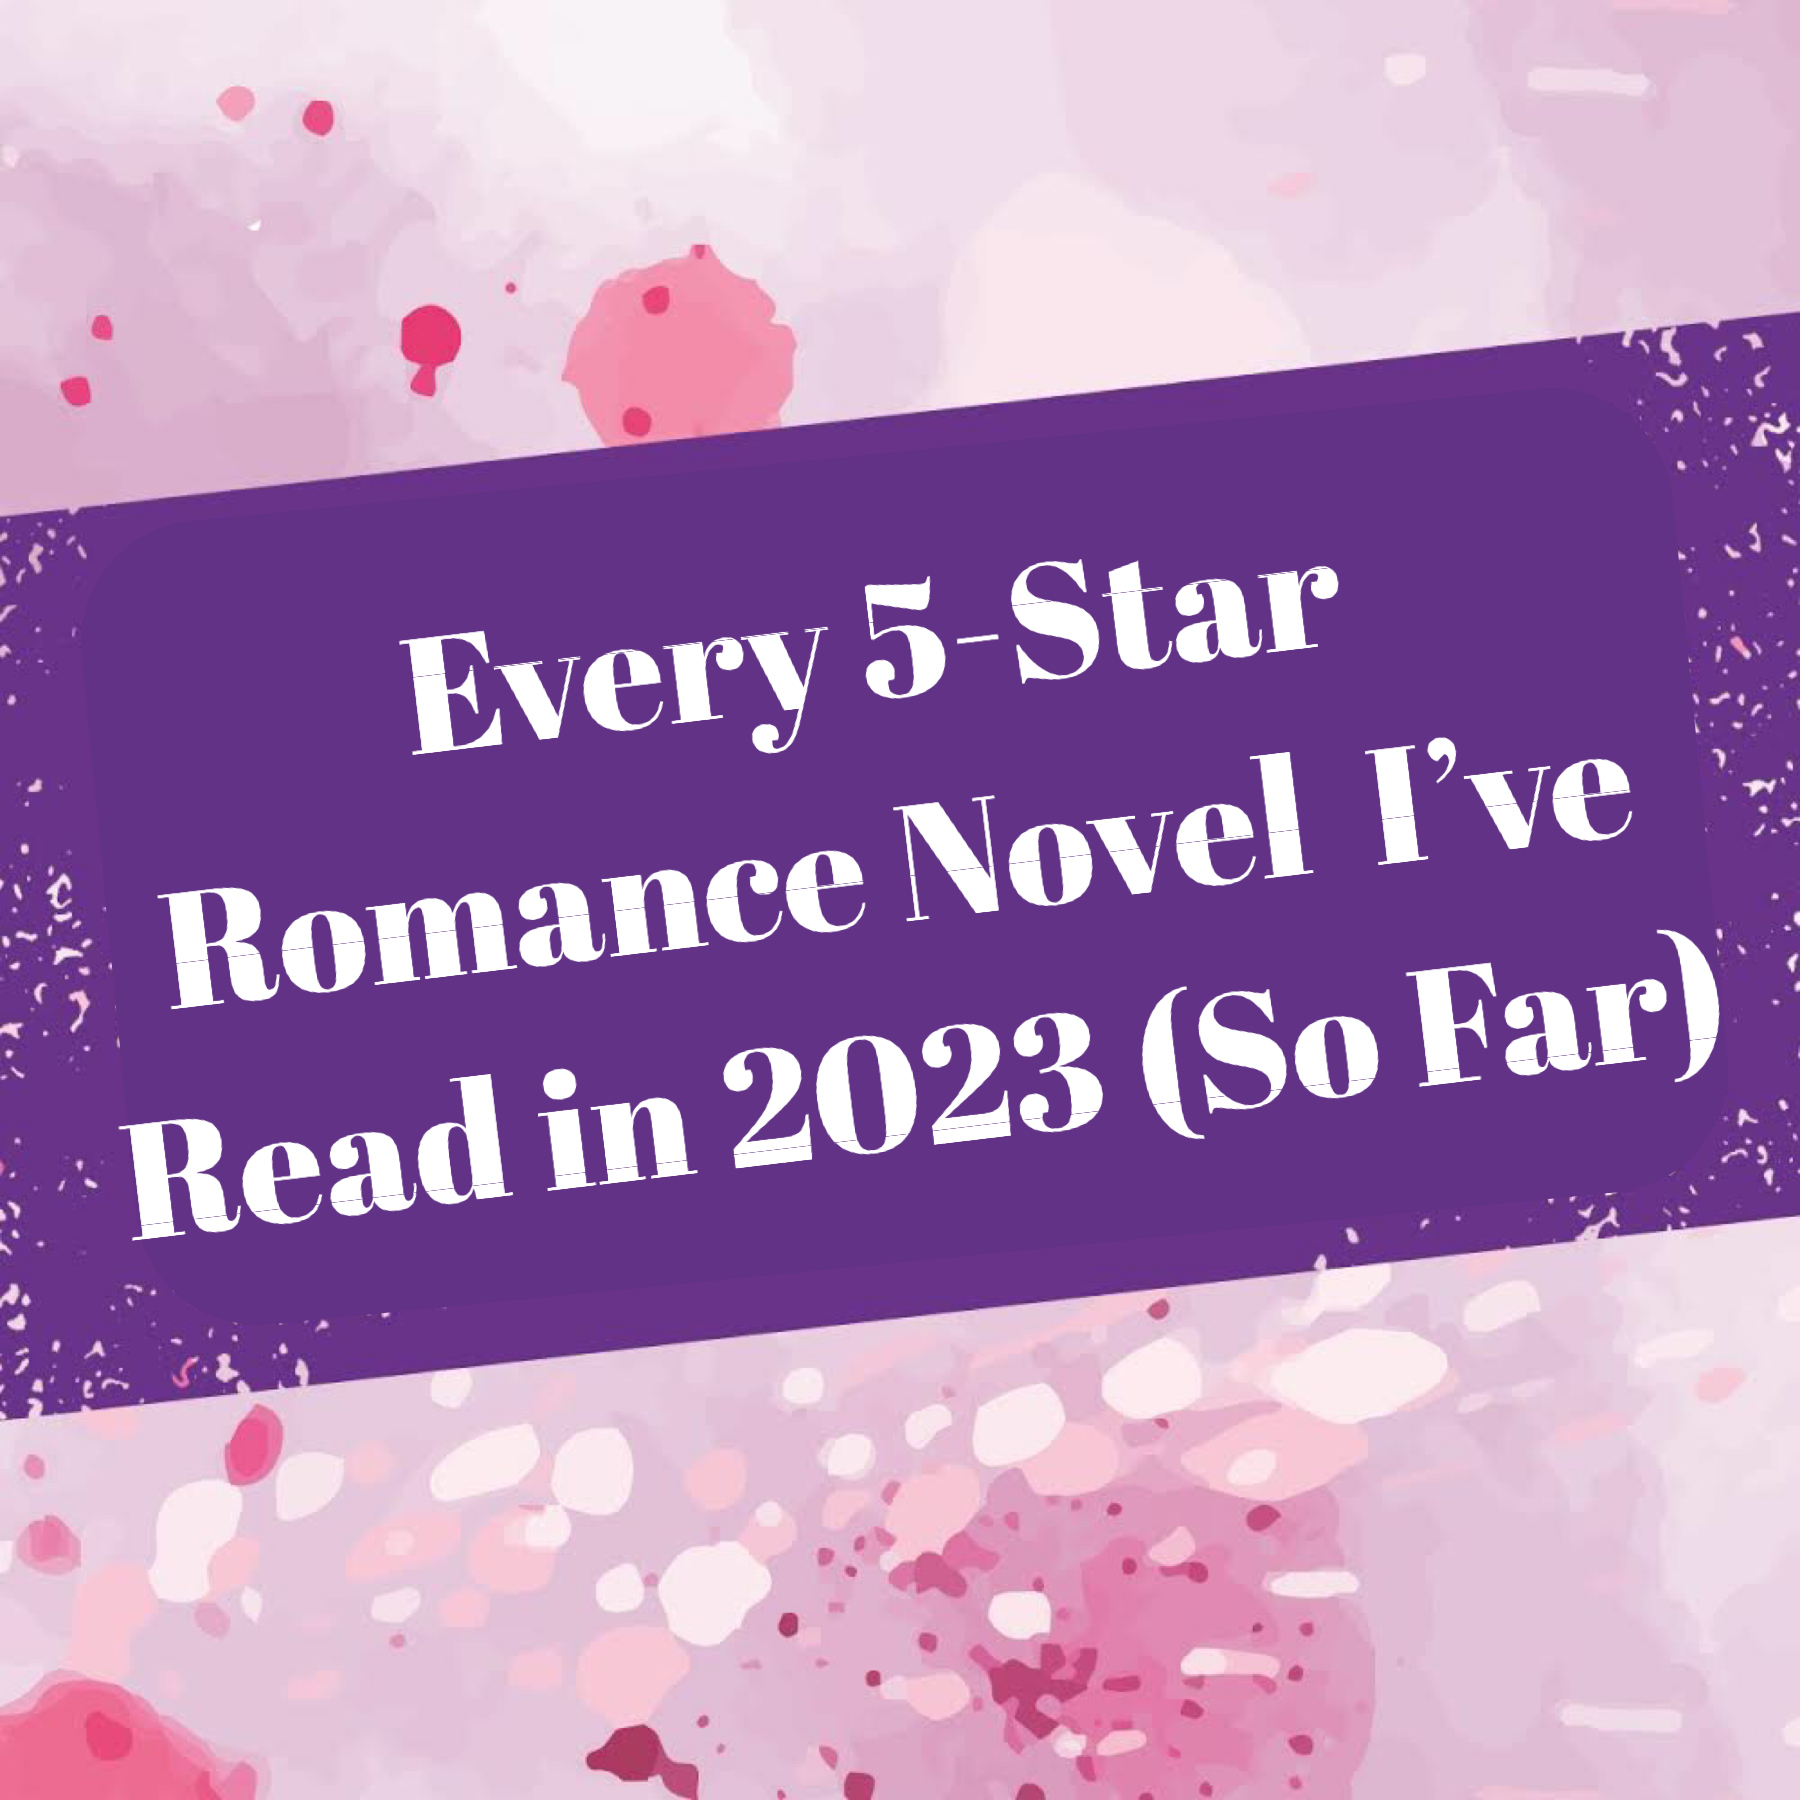 Every 5-Star Romance Novel Ive Read in 2023 (So Far)